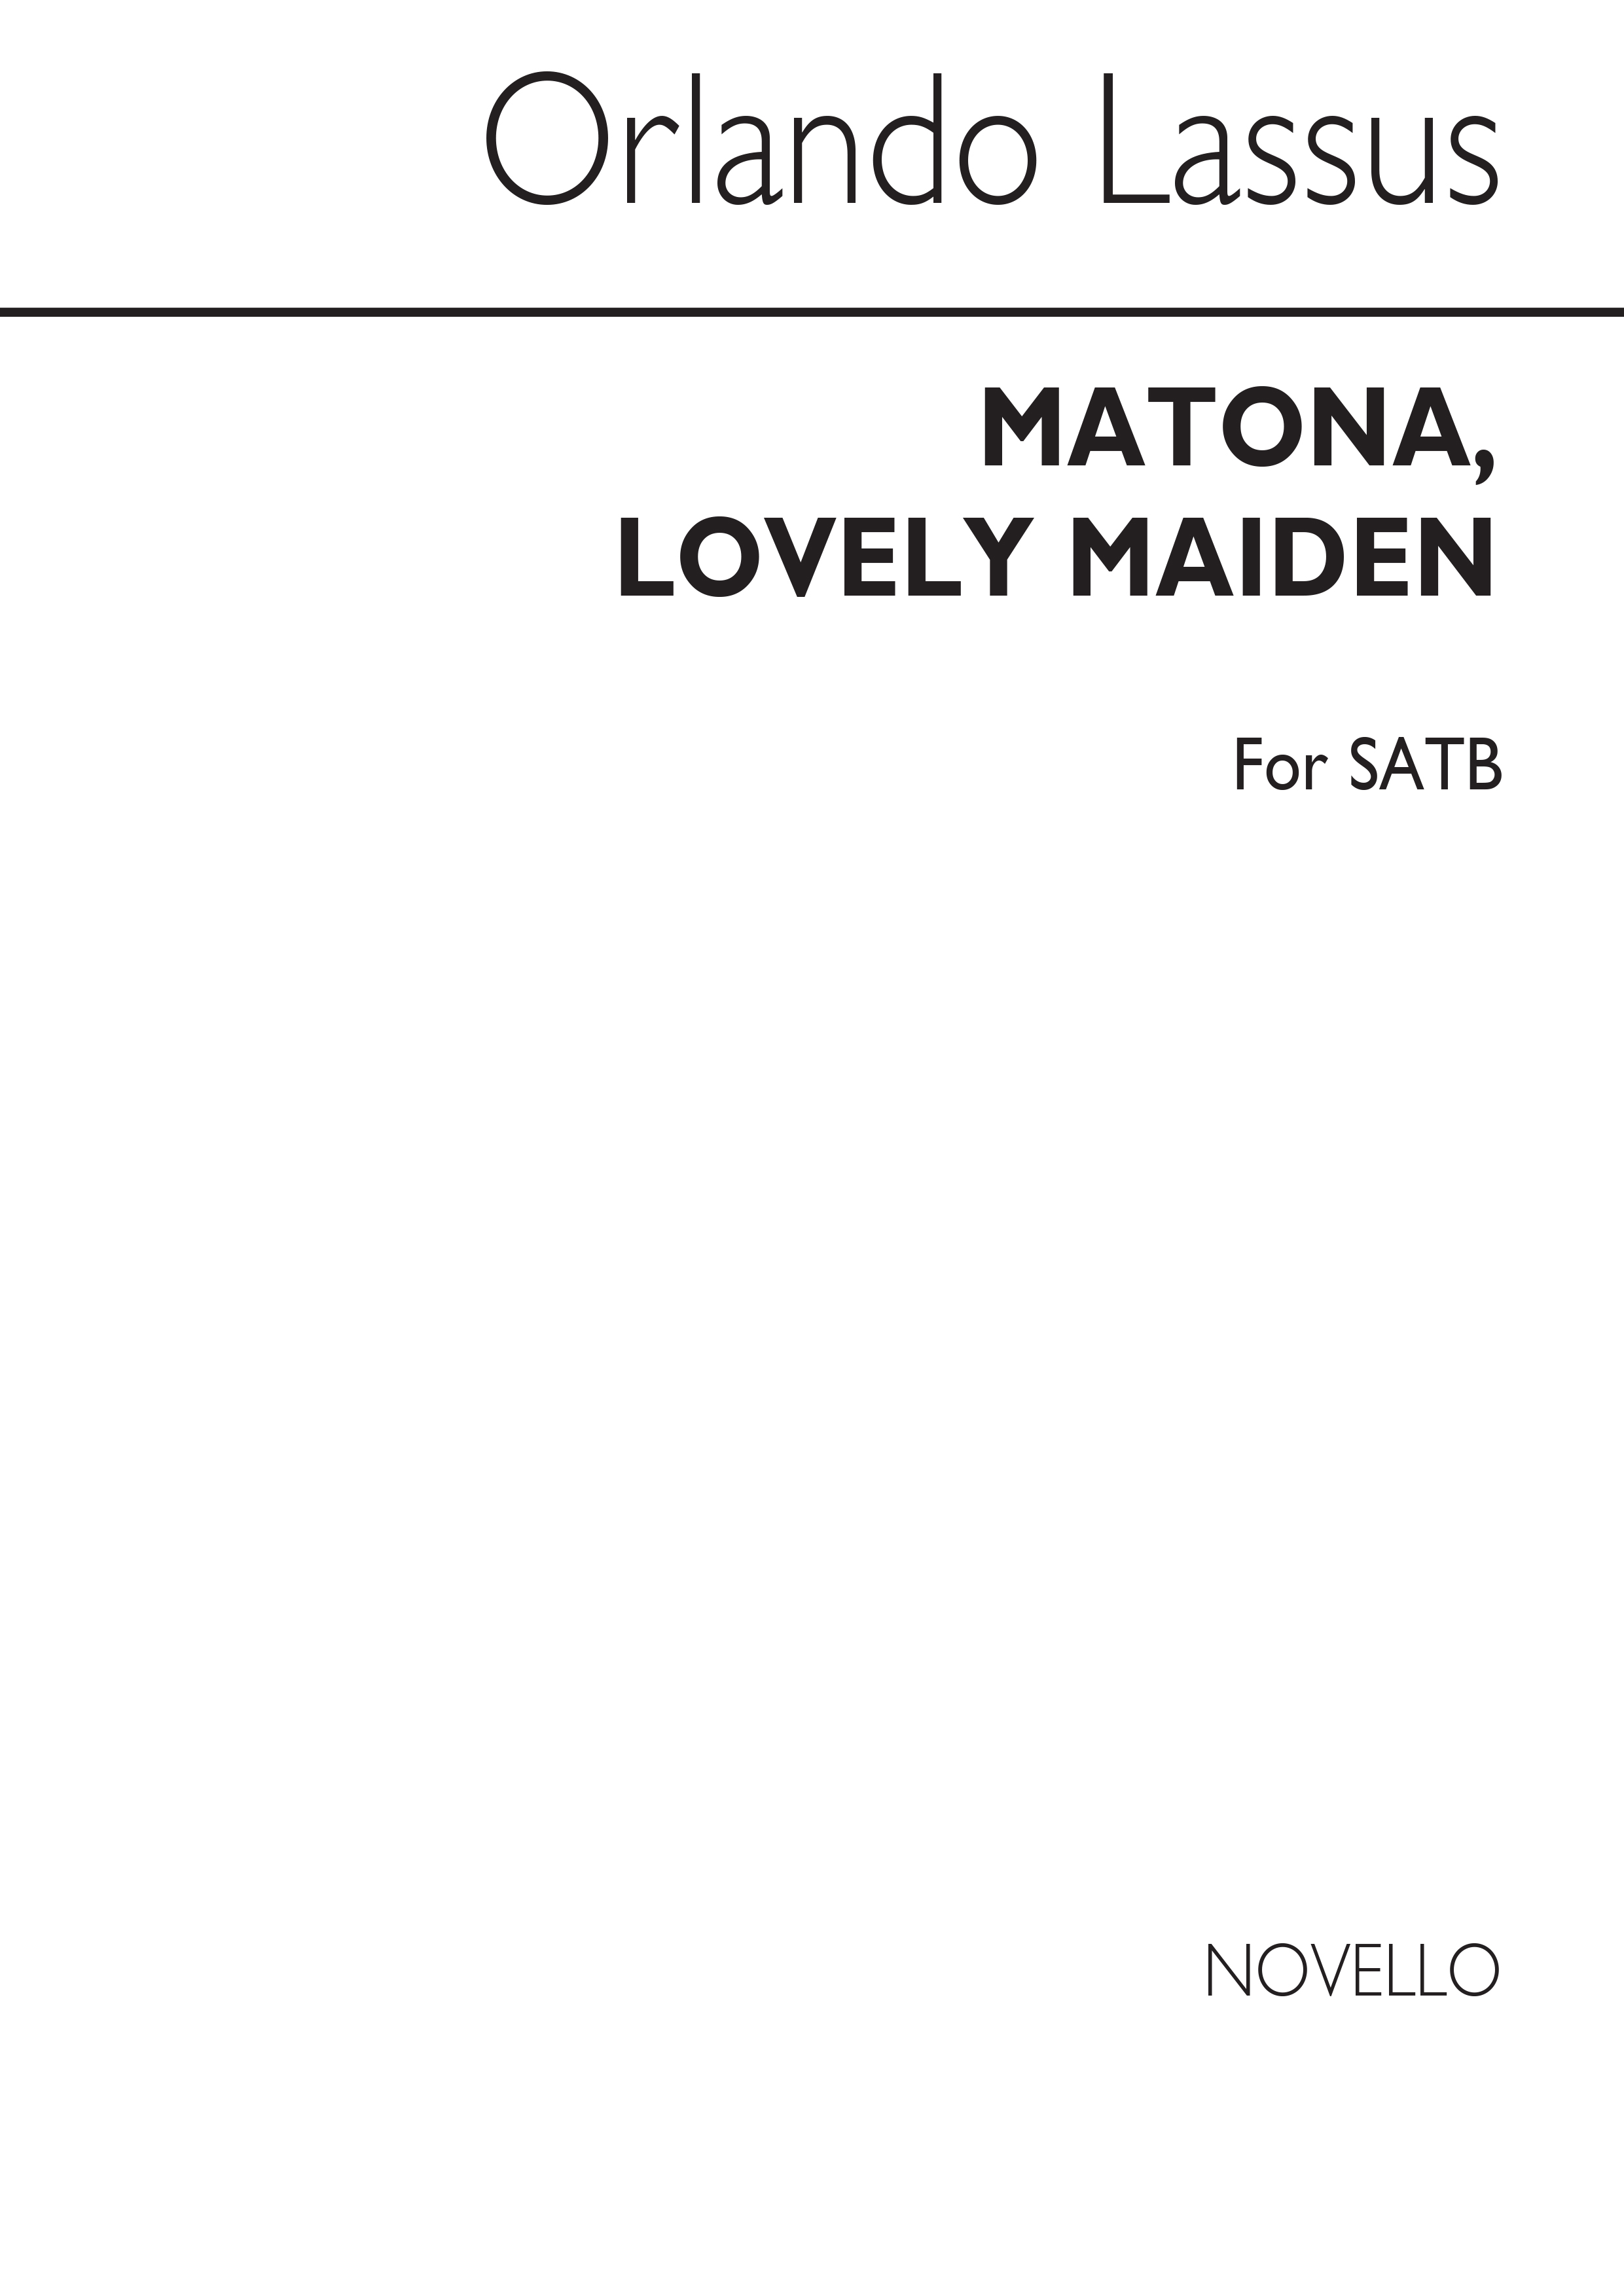 Orlando Lassus: Matona, Lovely Maiden